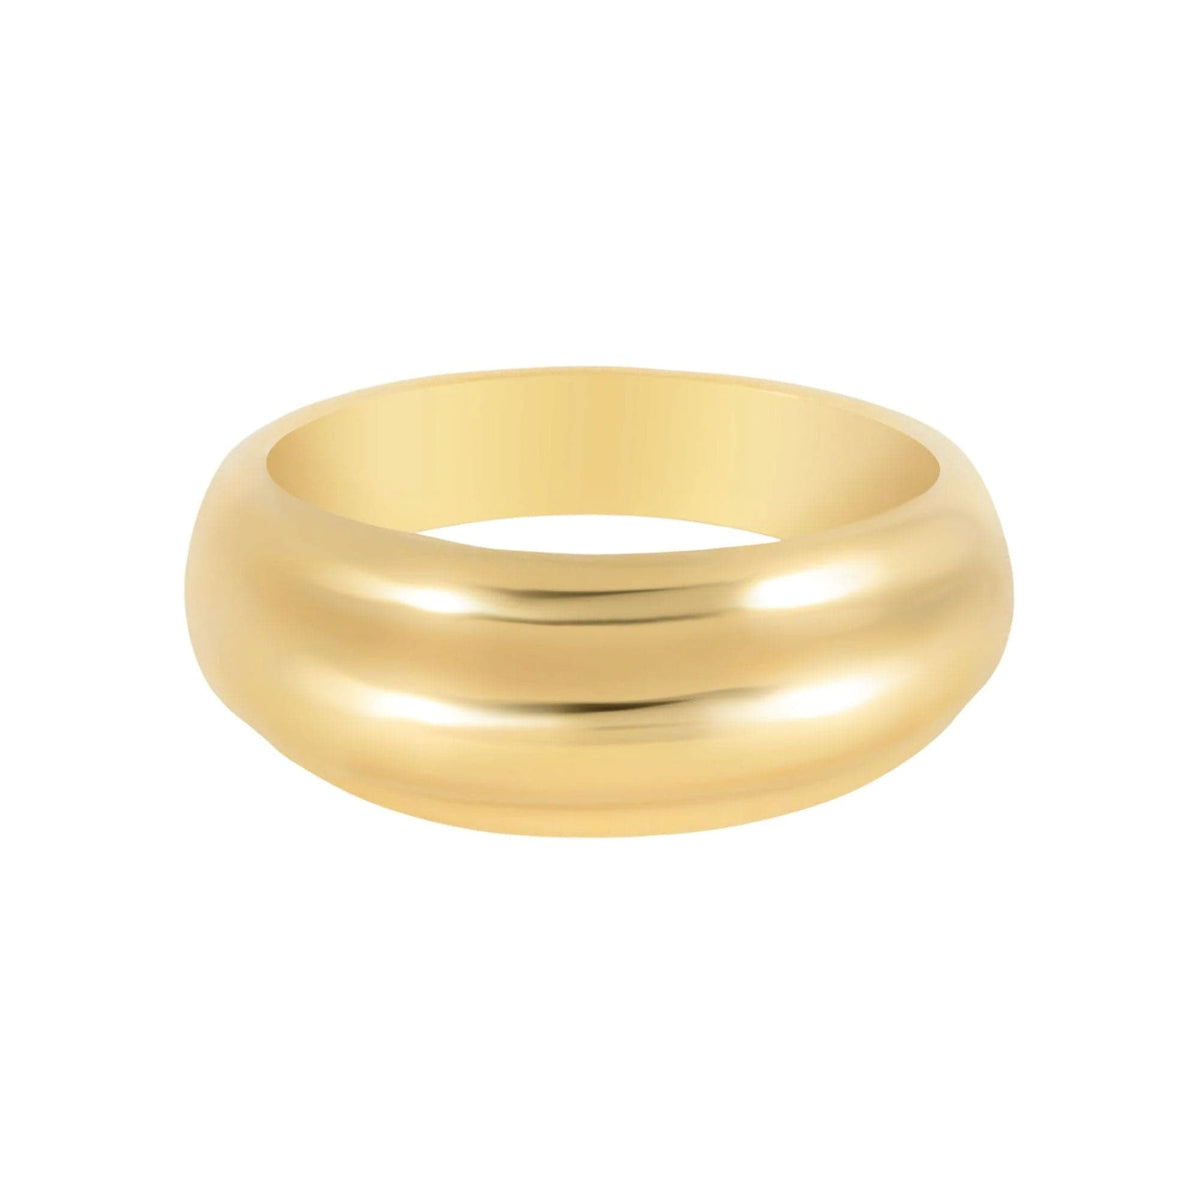 BohoMoon Stainless Steel Salt Lake Ring Gold / US 4 / UK H / EUR 46 / (xxsmall)